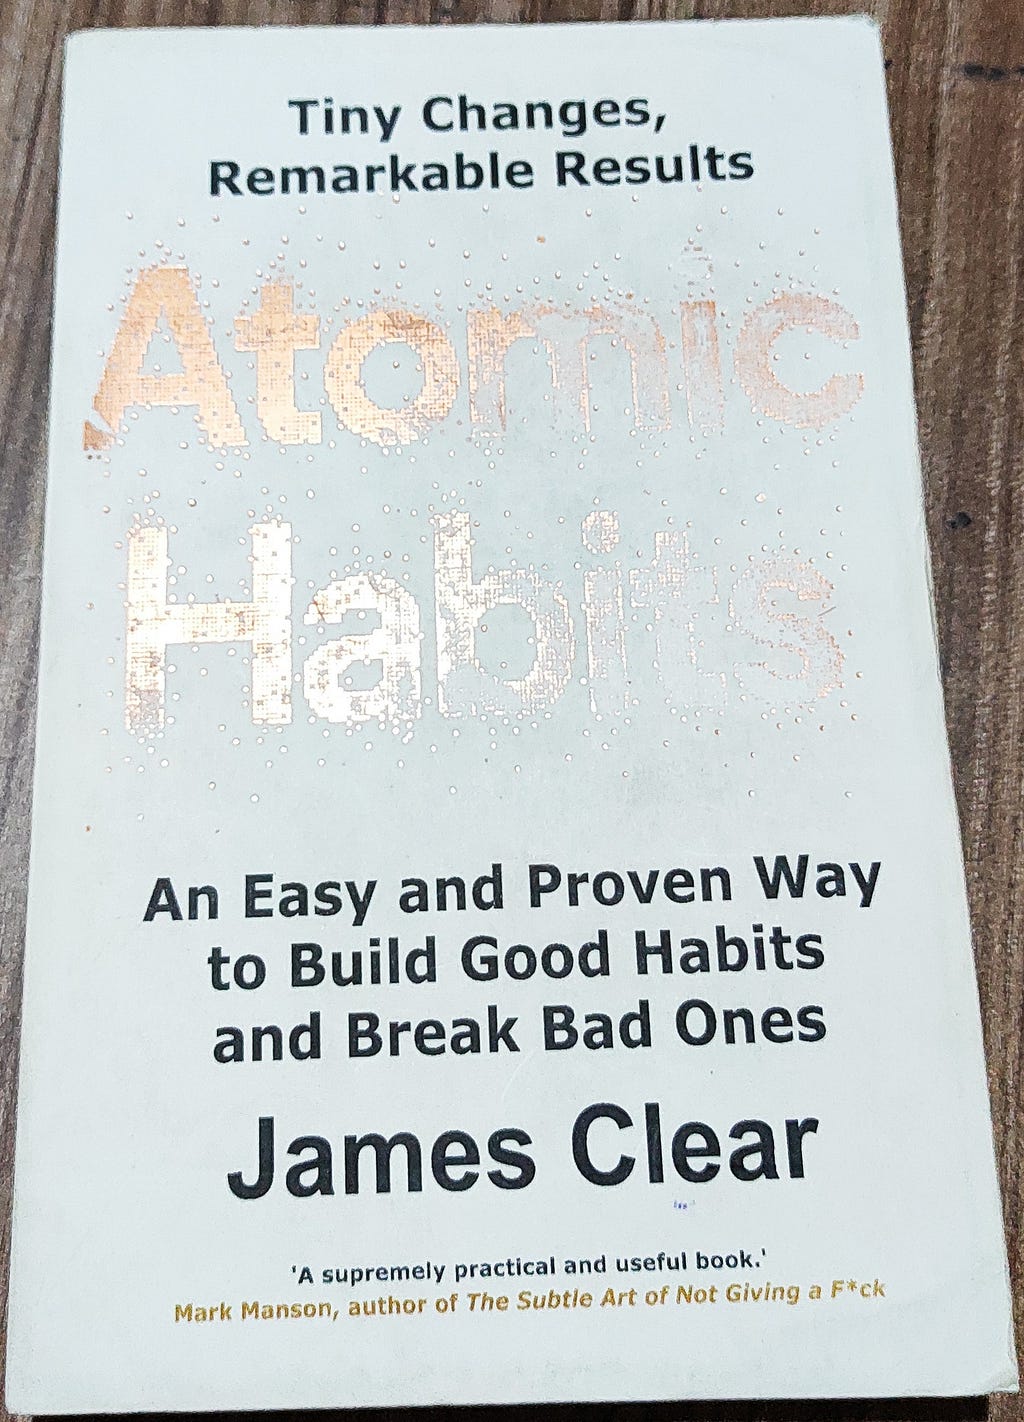 Atomic Habits Book